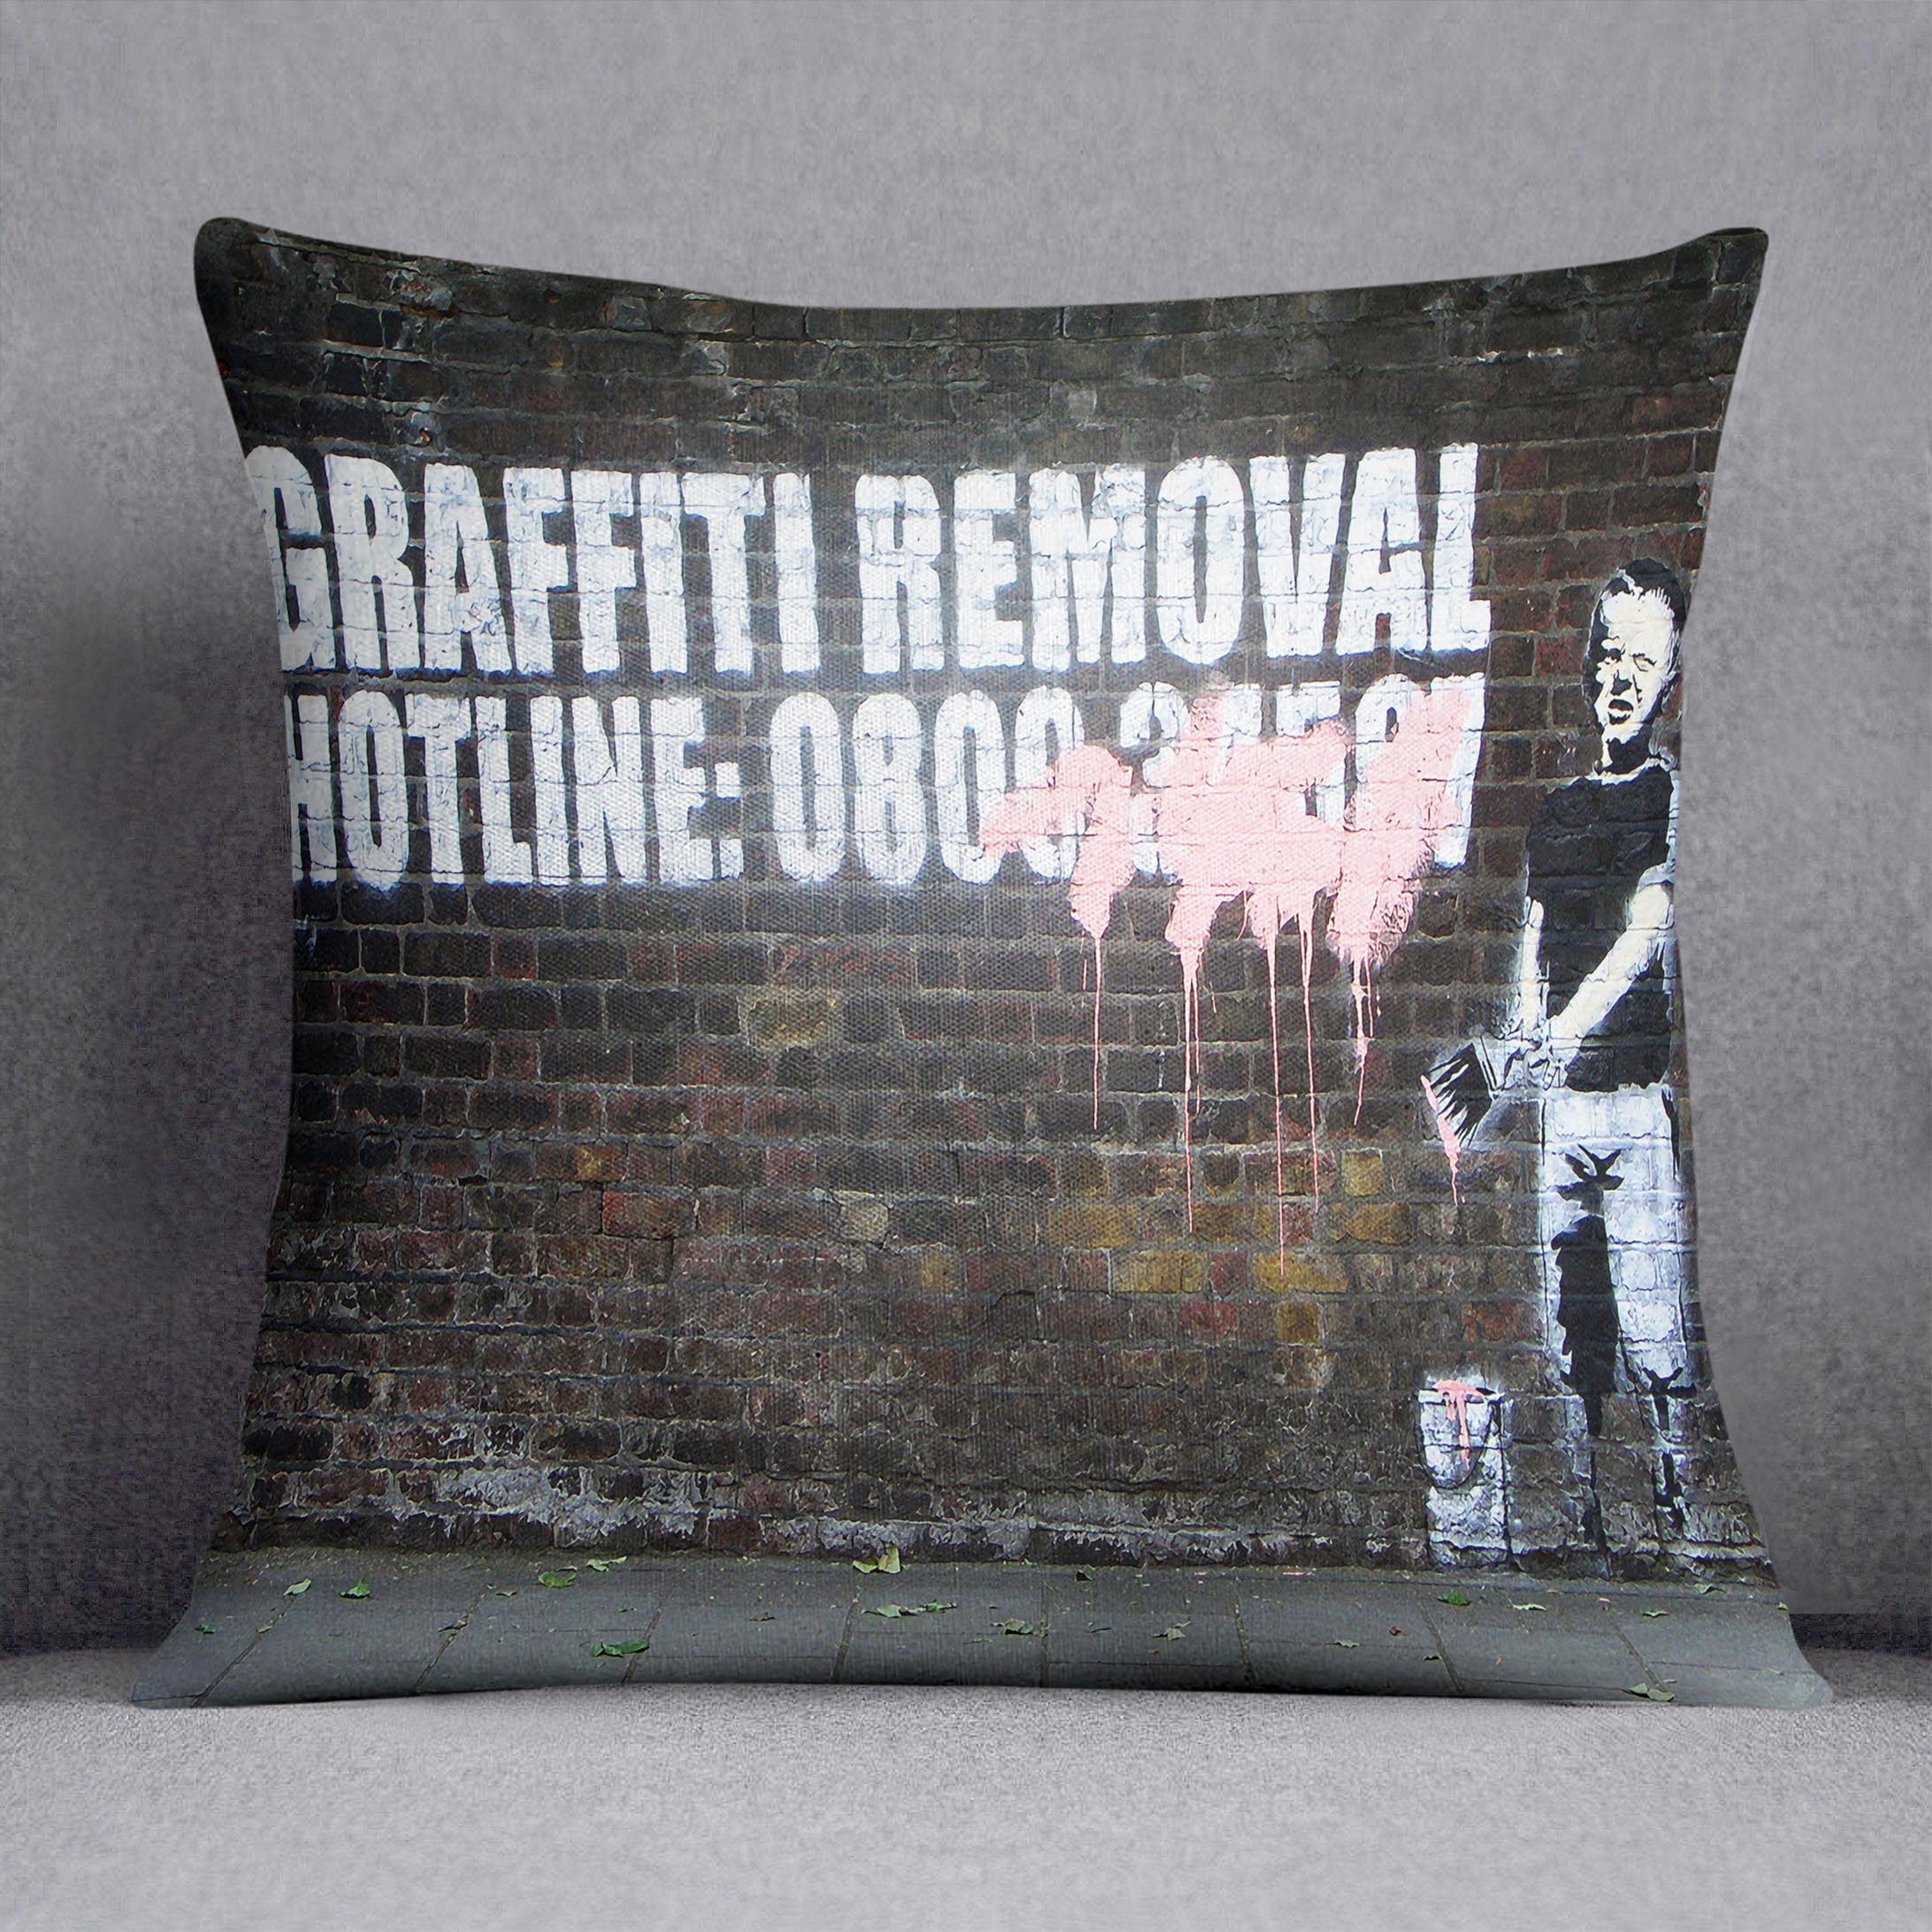 Banksy Graffiti Removal Hotline Cushion